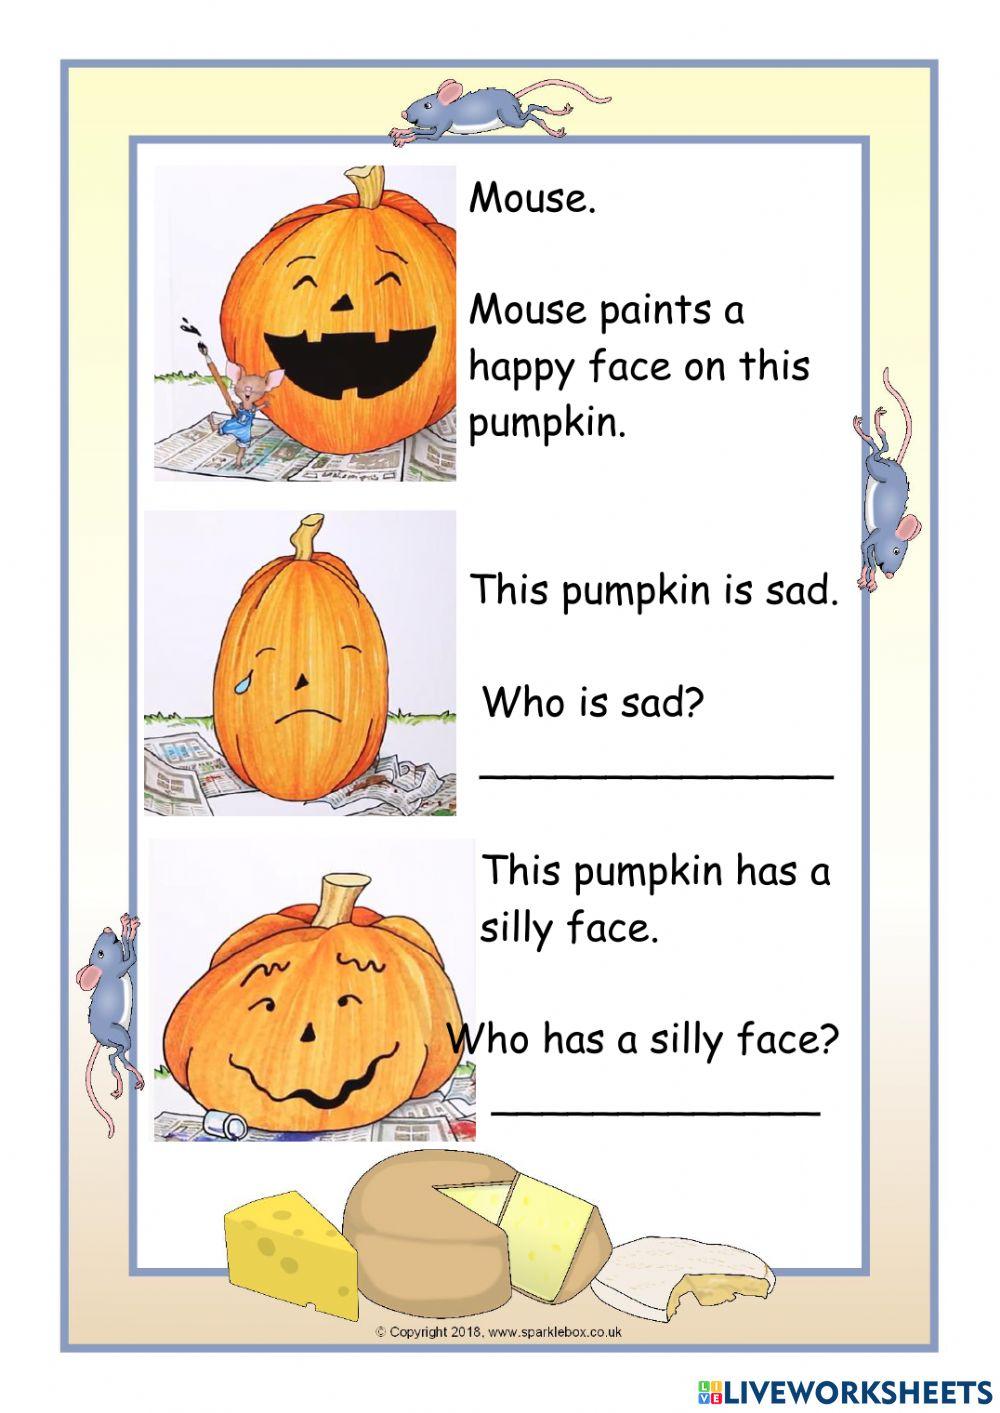 I'ts Pumpkin Day, Mouse!